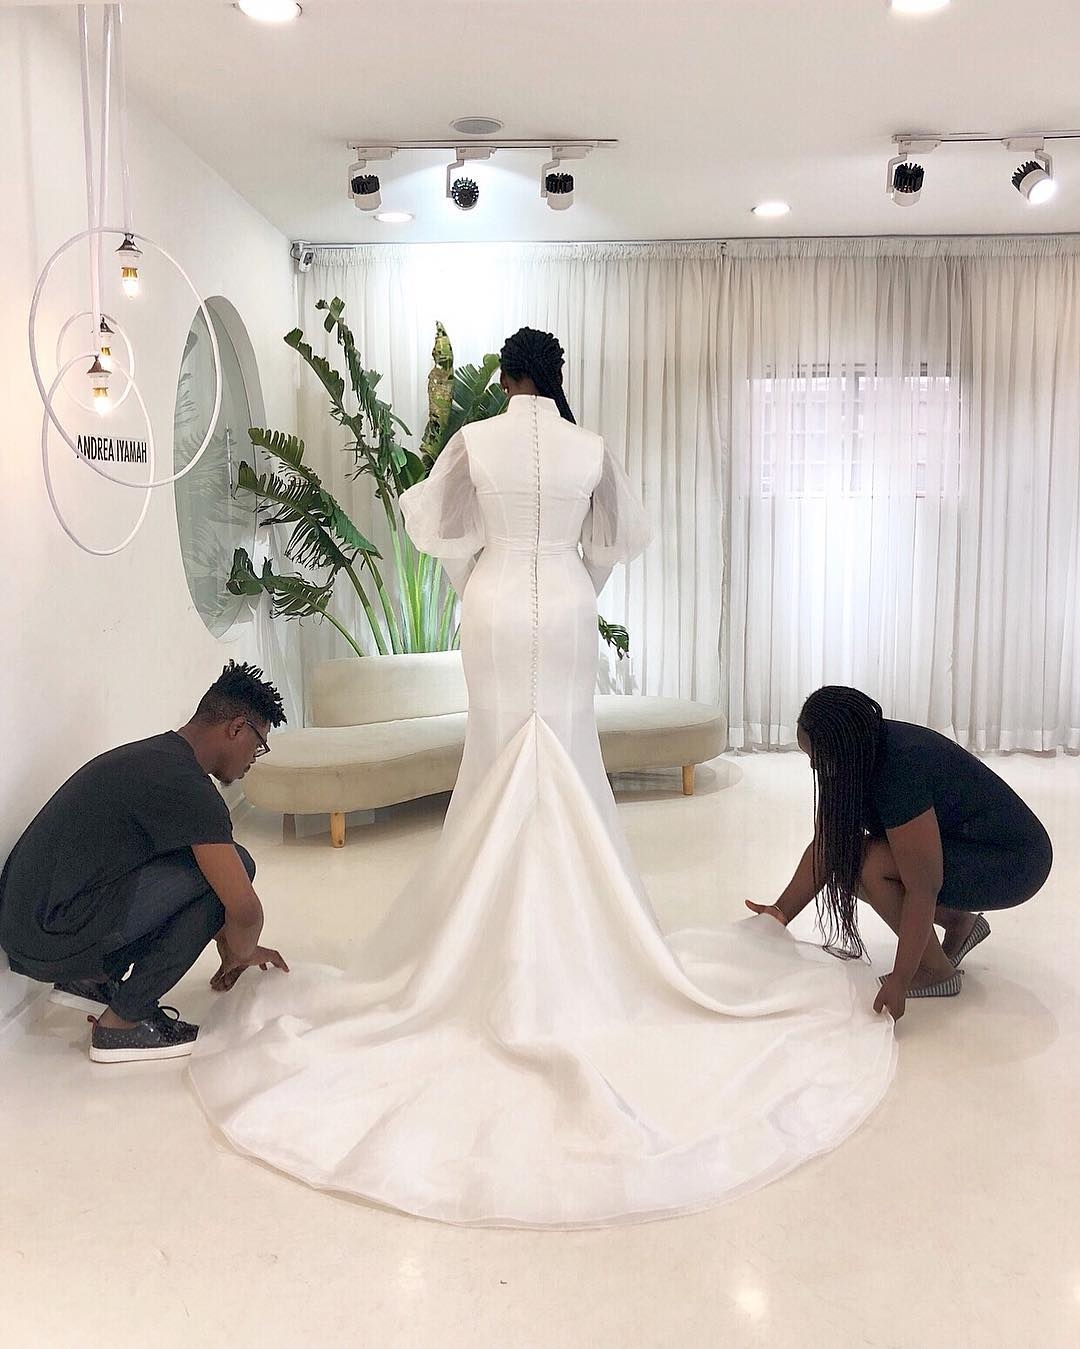 Andrea Iyamah Bridals Fashion and Wedding Dress Designer Toronto